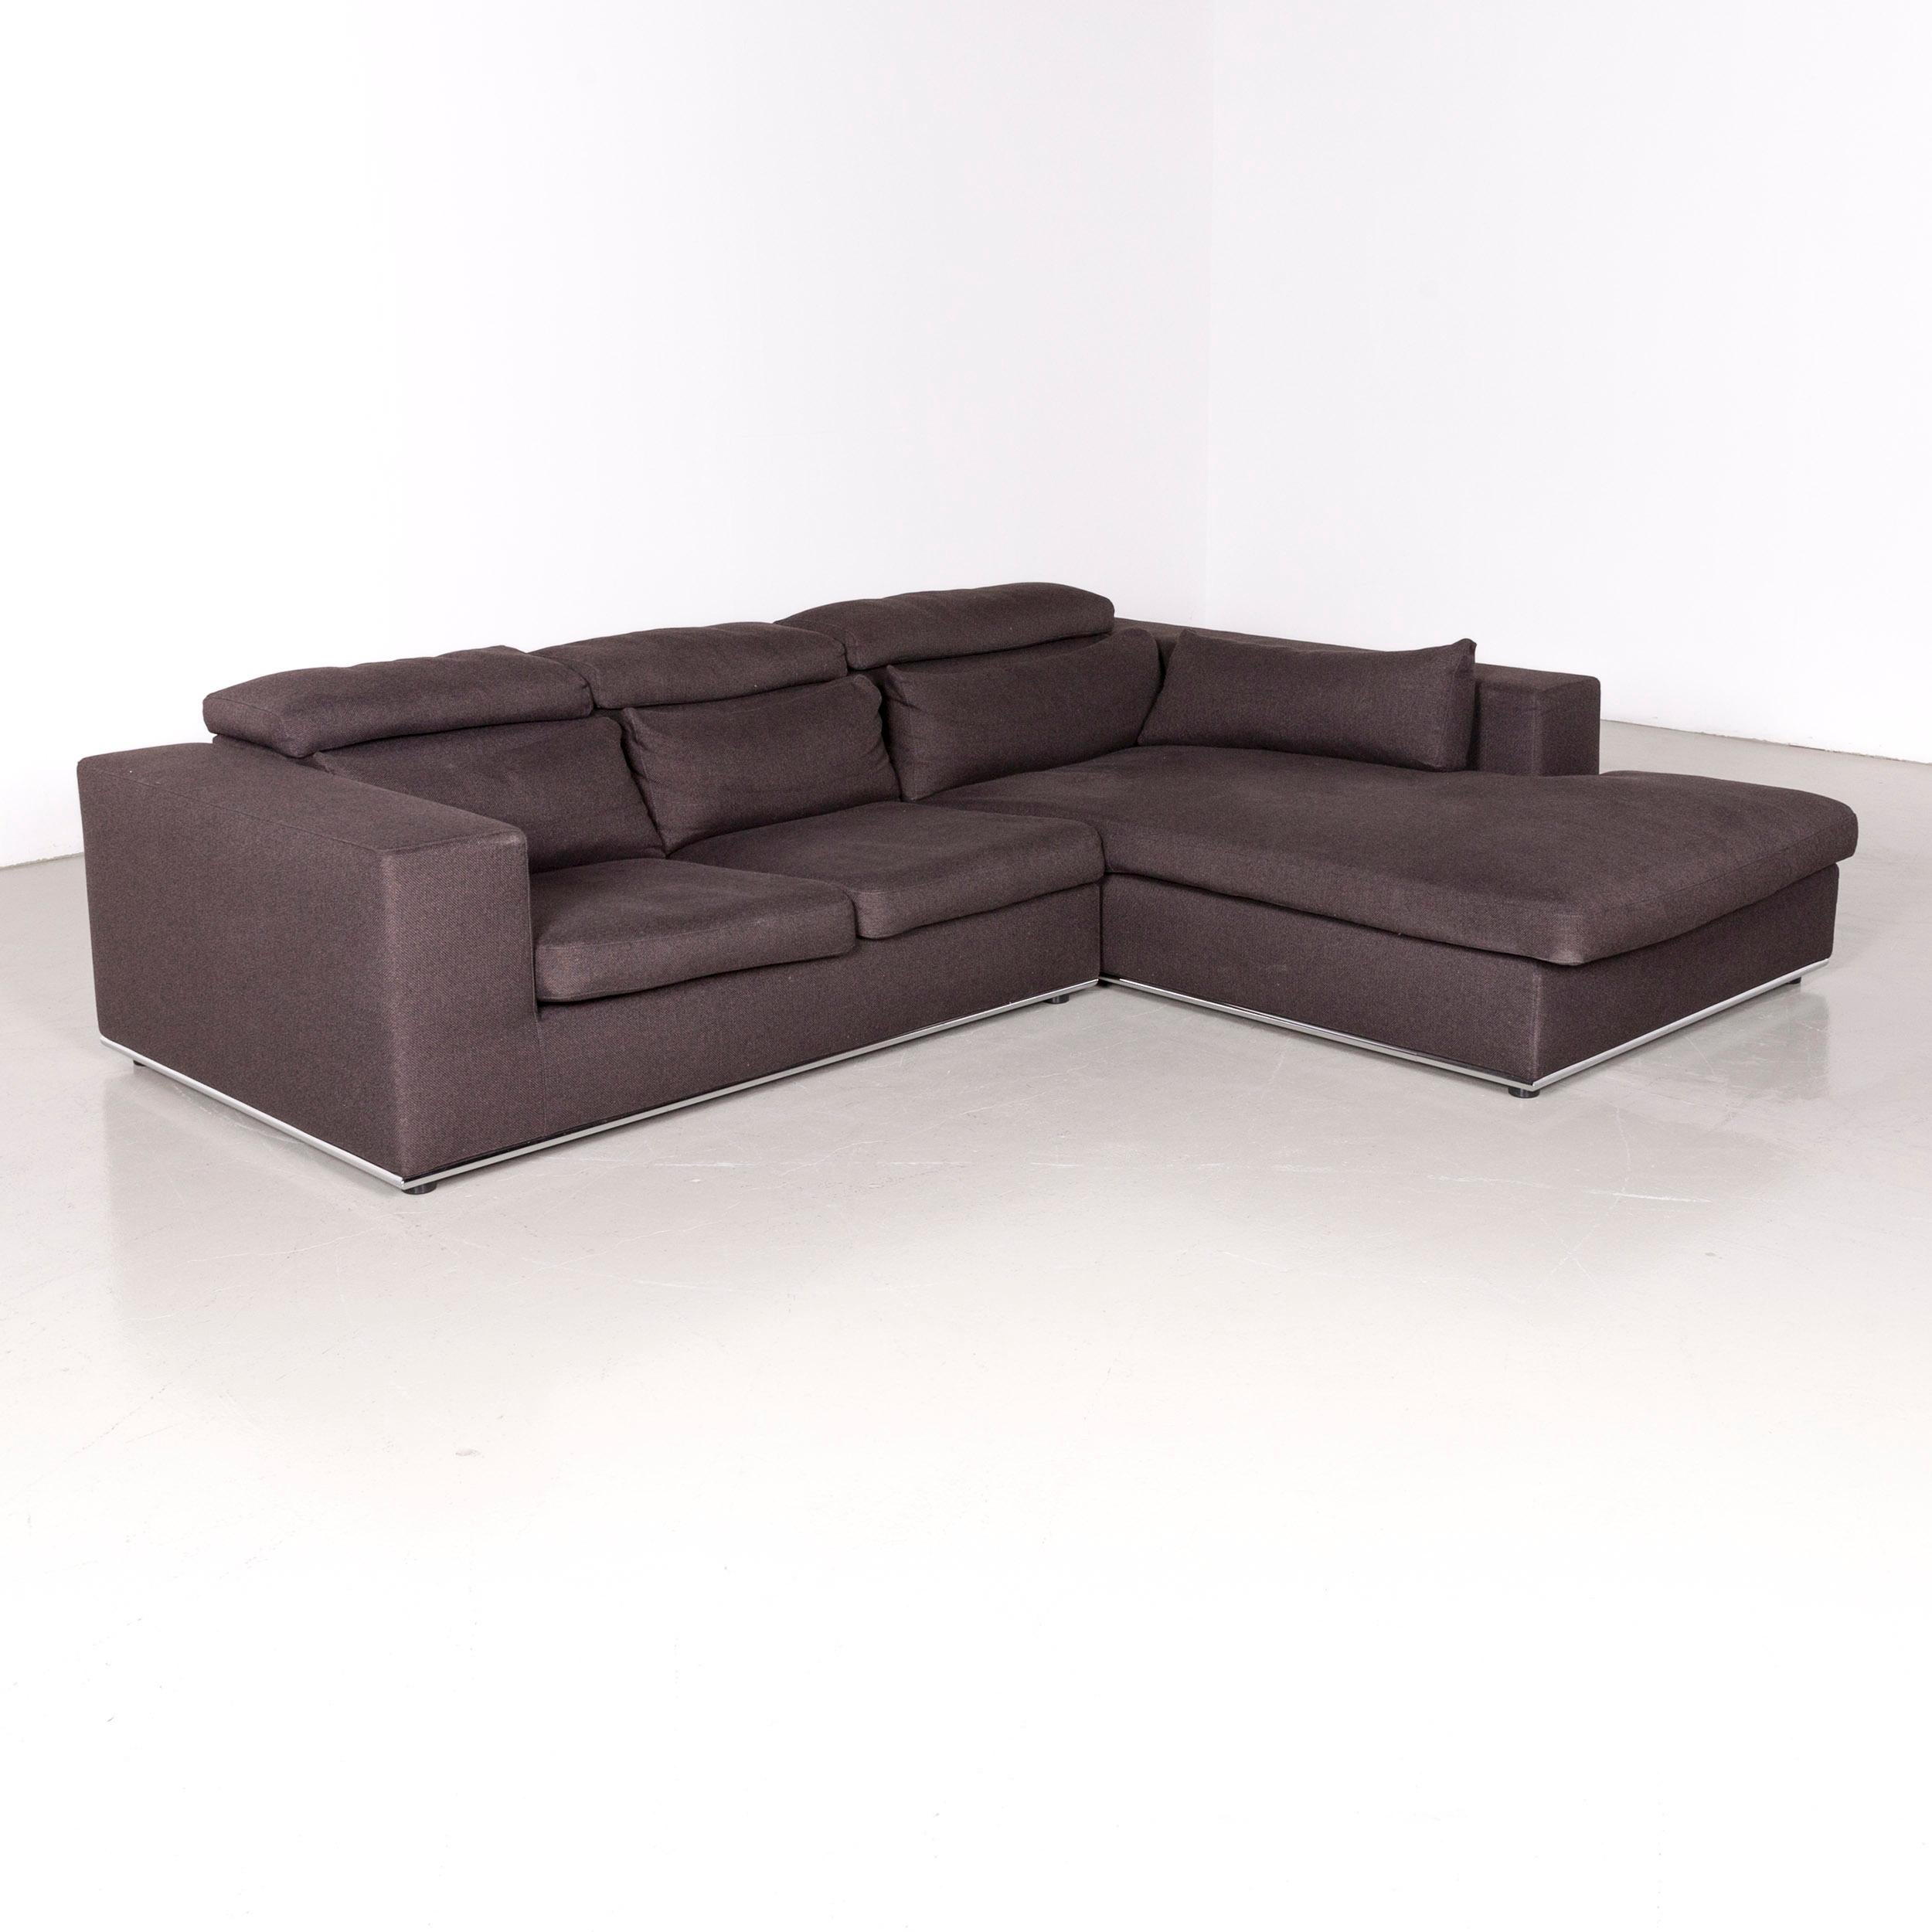 Who's Perfect Toronto designer fabric corner-sofa anthracite couch.